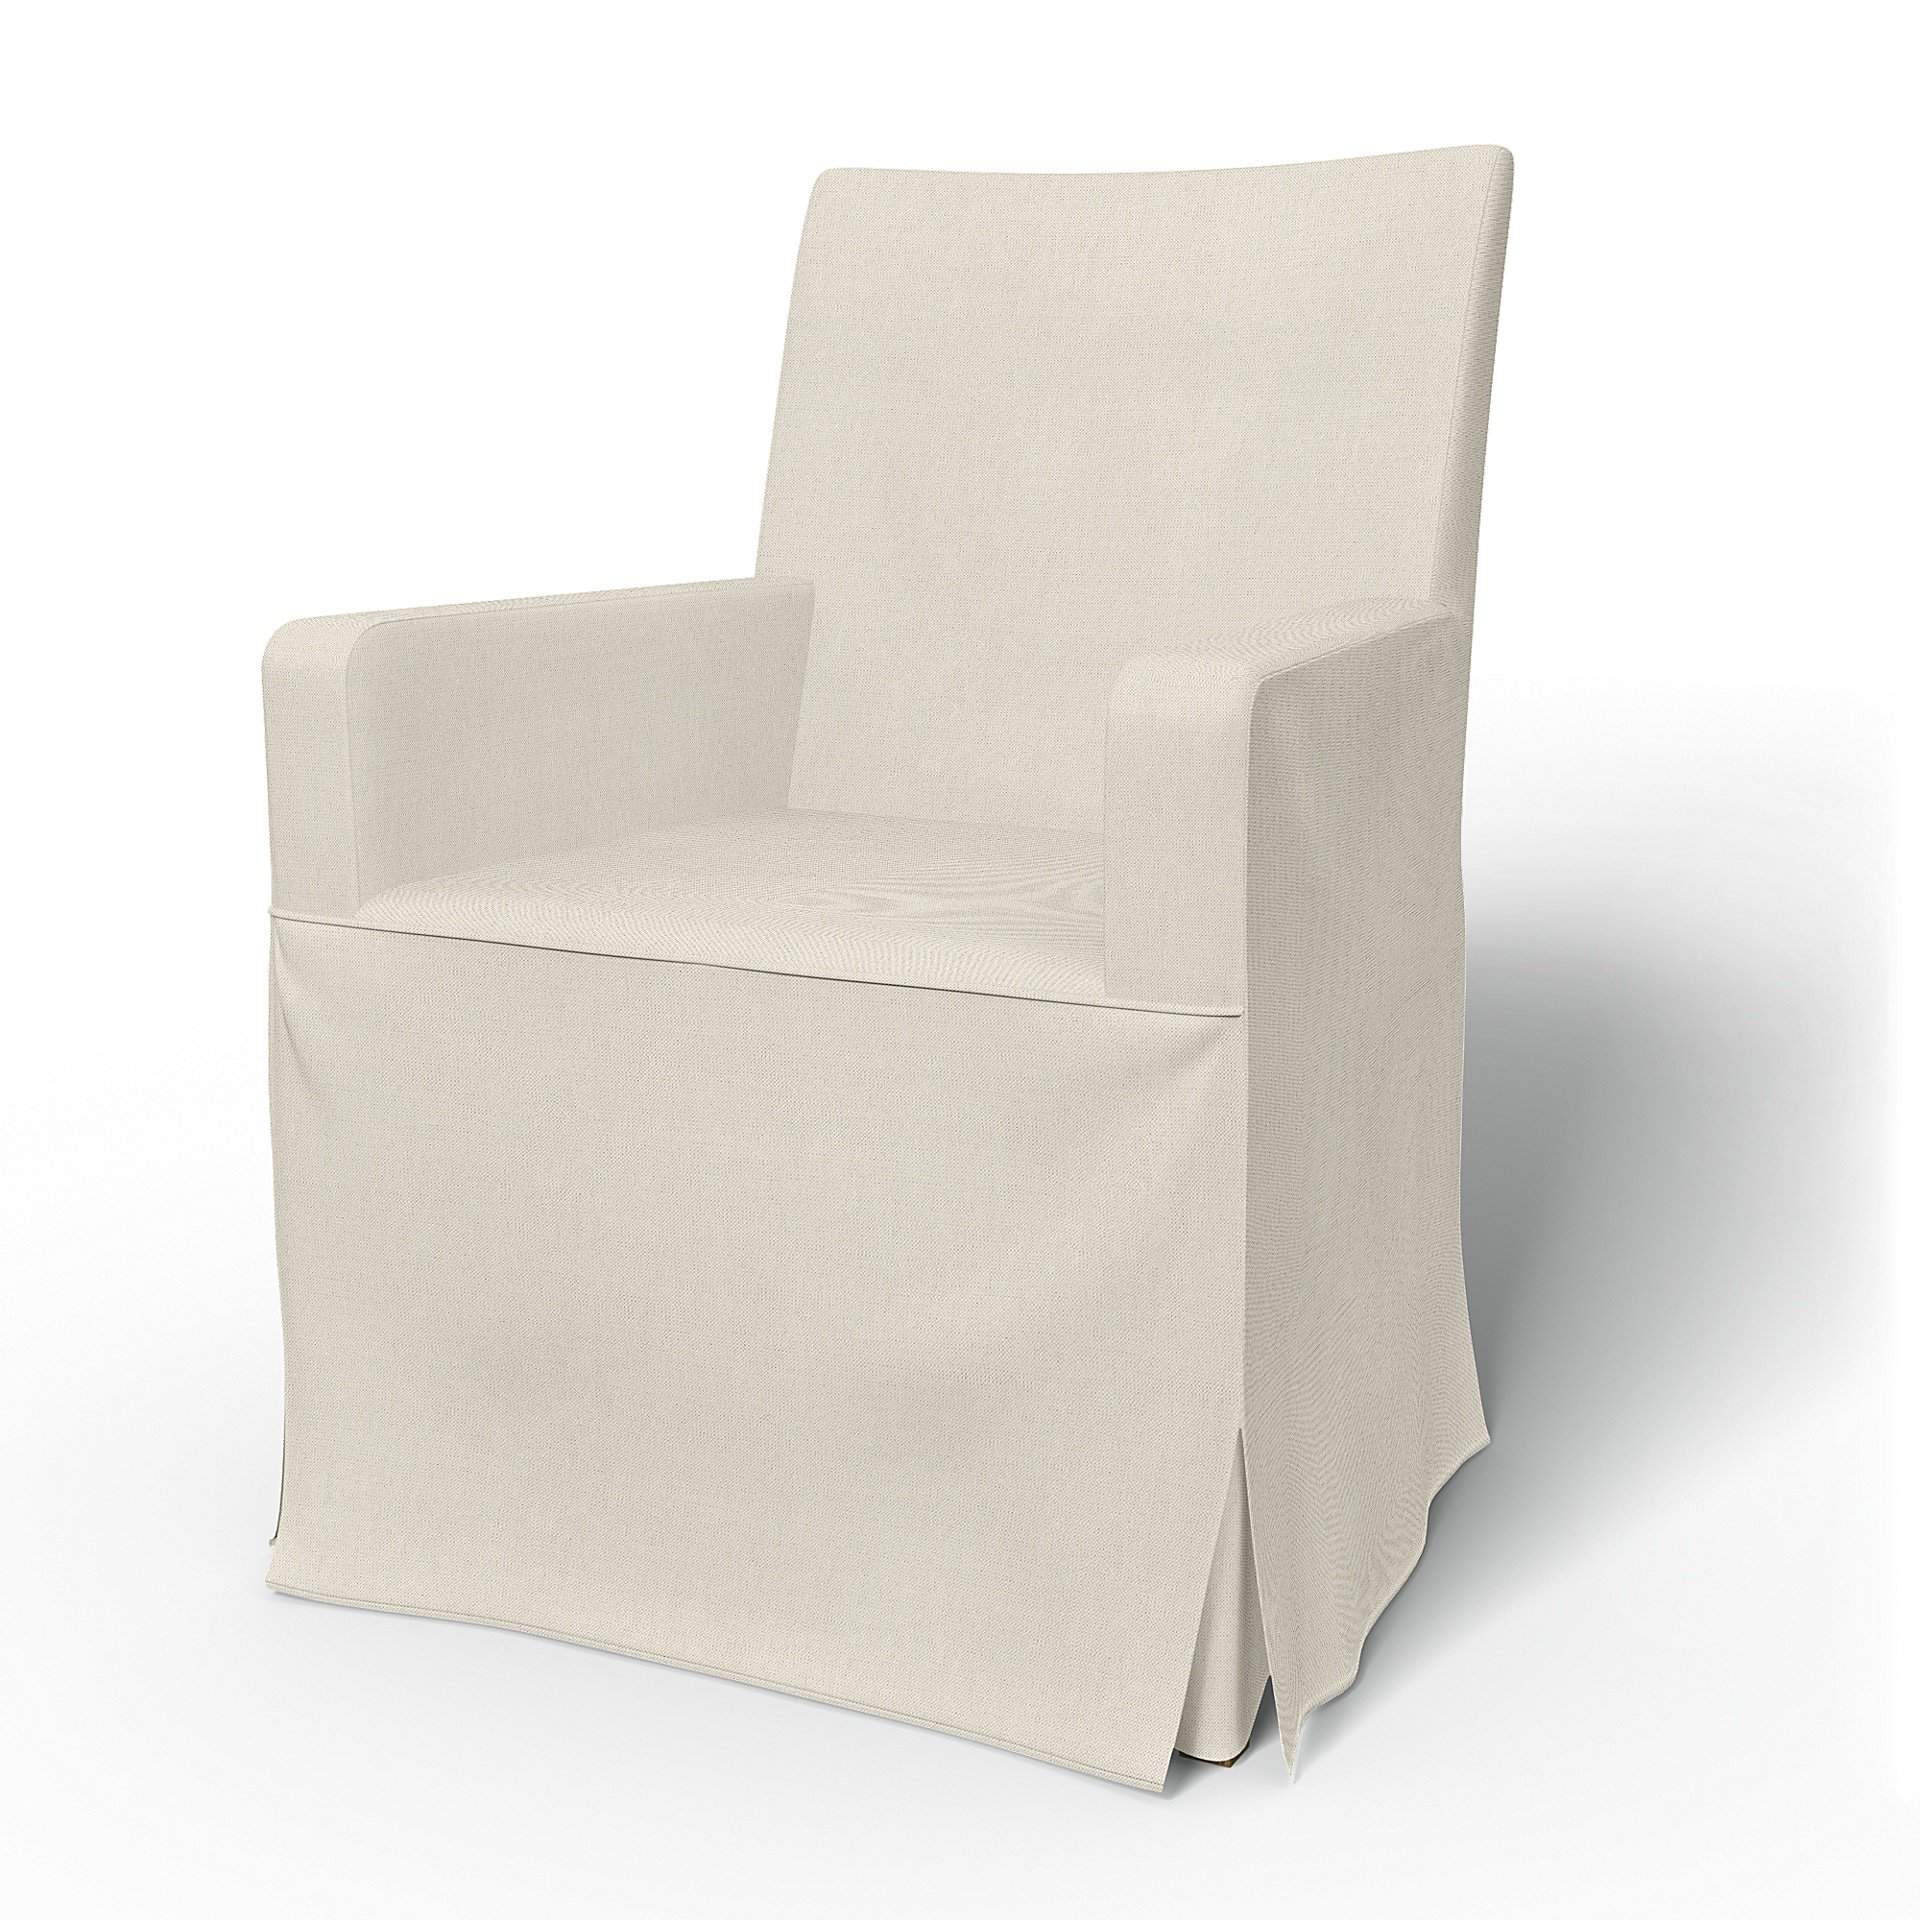 IKEA - Henriksdal, Chair cover w/ armrests, long skirt box pleat, Unbleached, Linen - Bemz